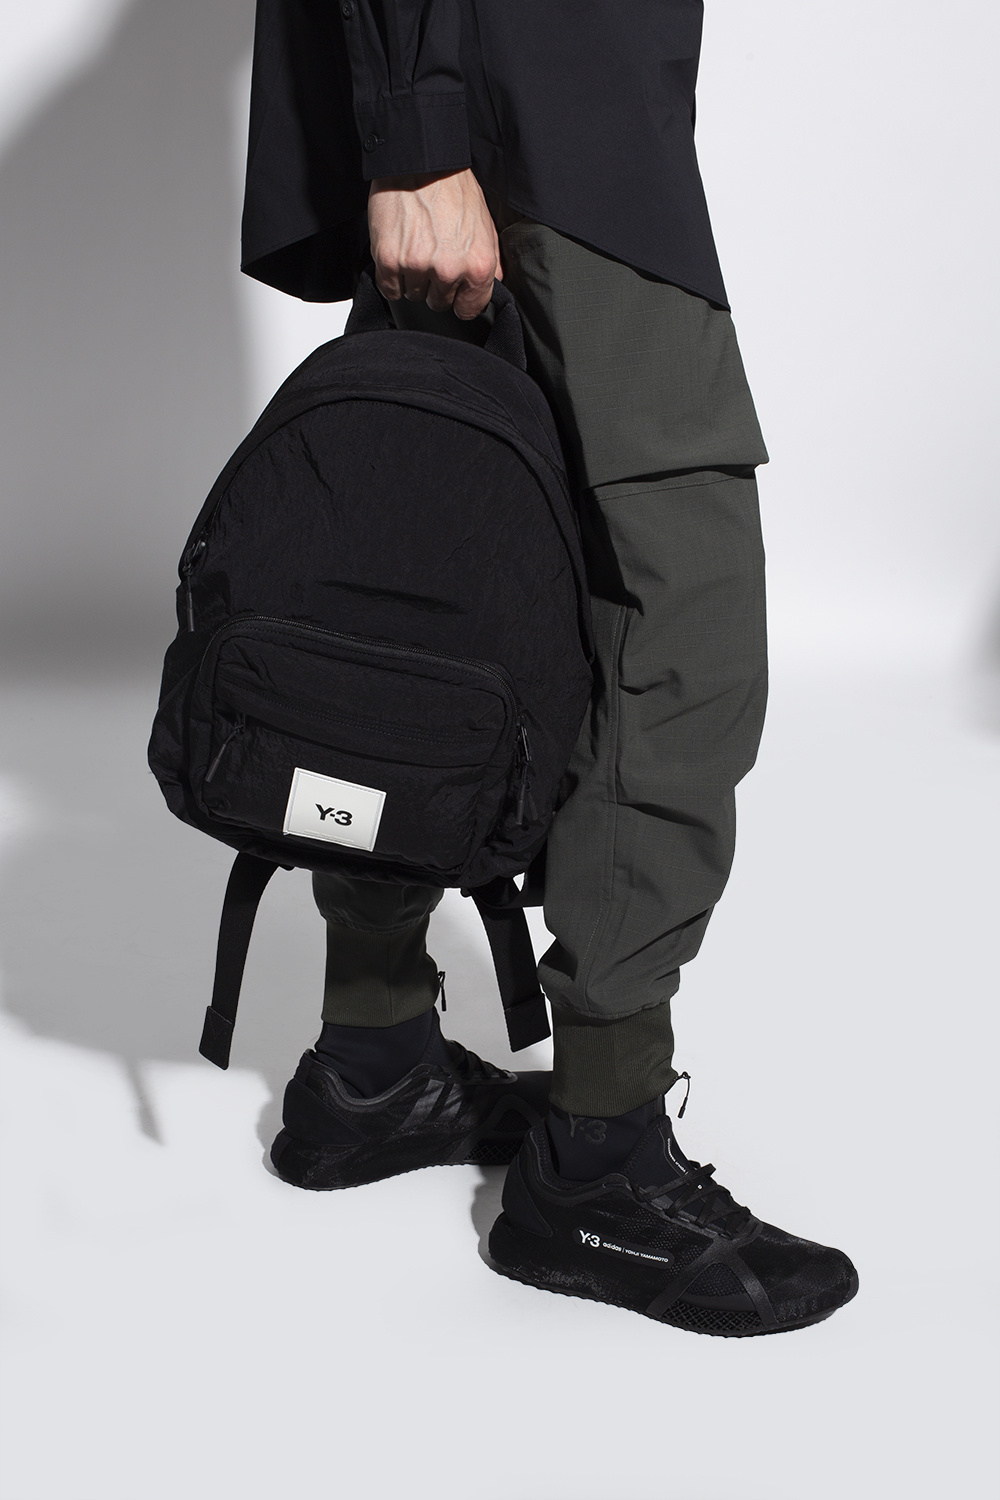 SchaferandweinerShops Canada - 3 Yohji Yamamoto - Pashli tote bag - Backpack  with pockets Y